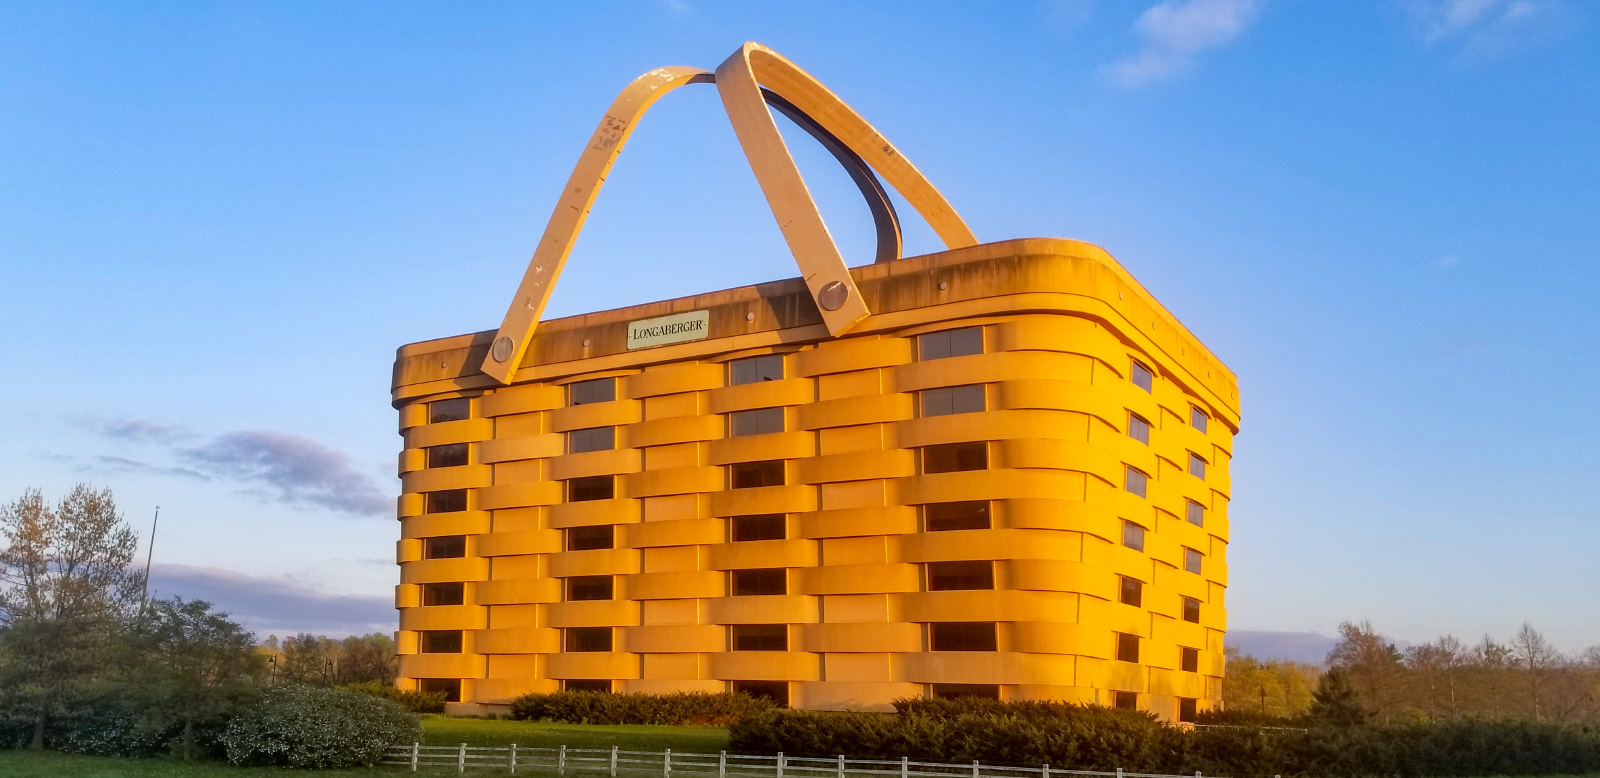 Roadside photo of a massive basket-shaped building